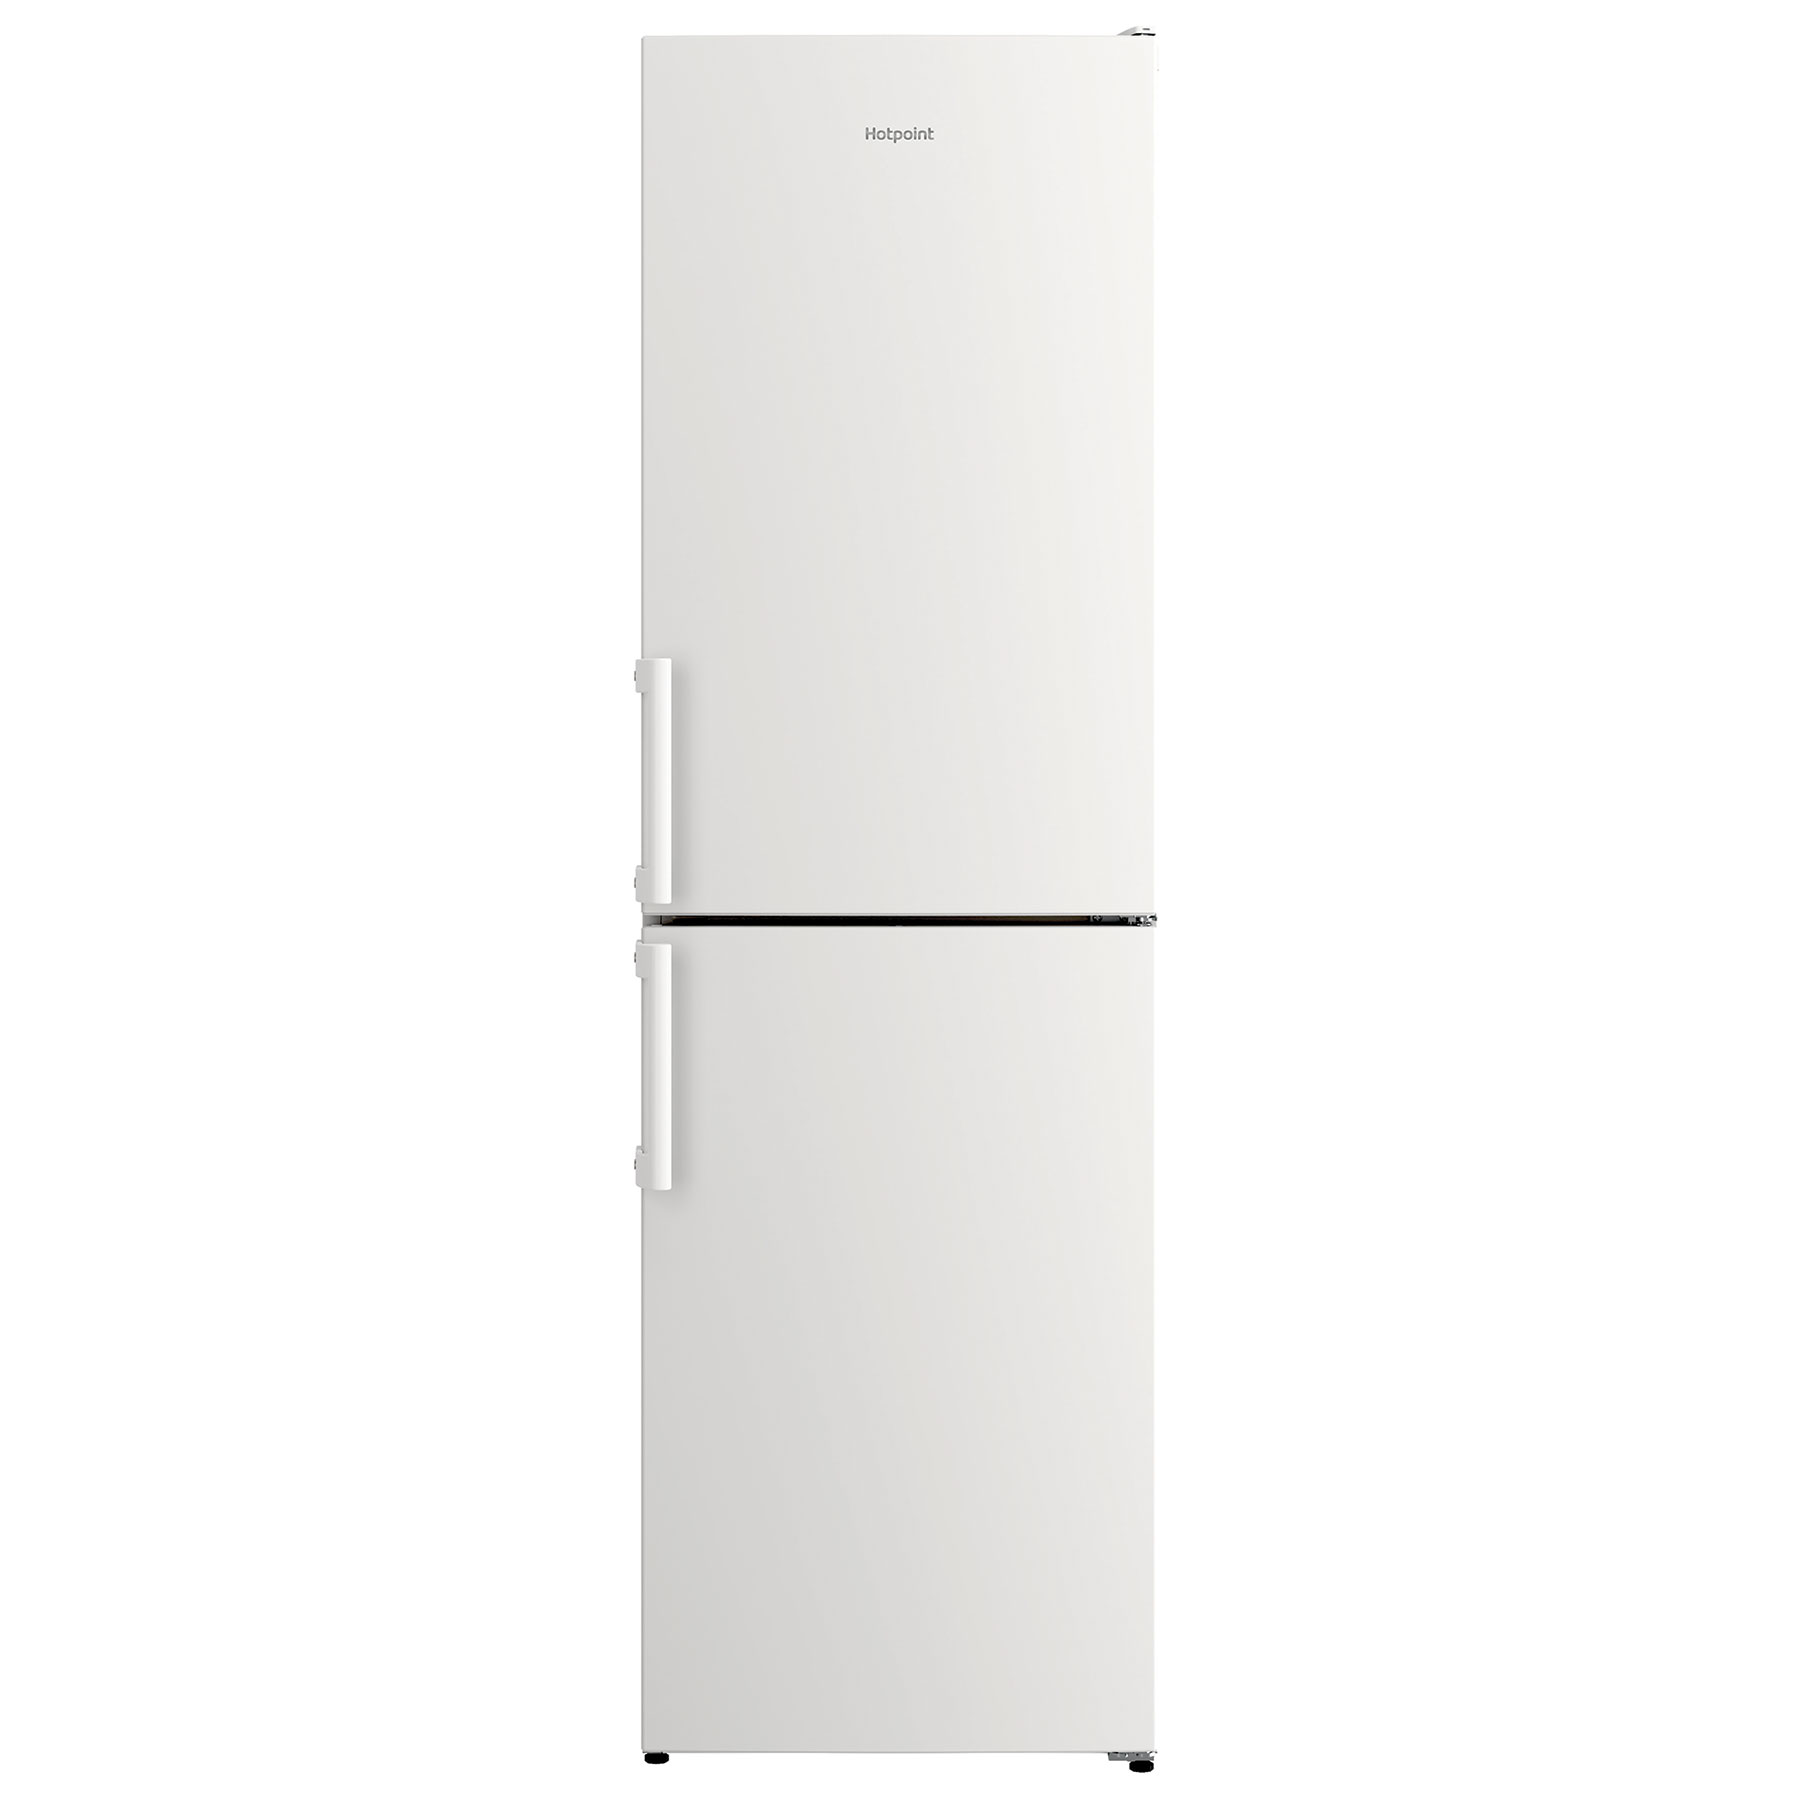 Hotpoint HB55732W 54cm Fridge Freezer in White 1 82m E Rated